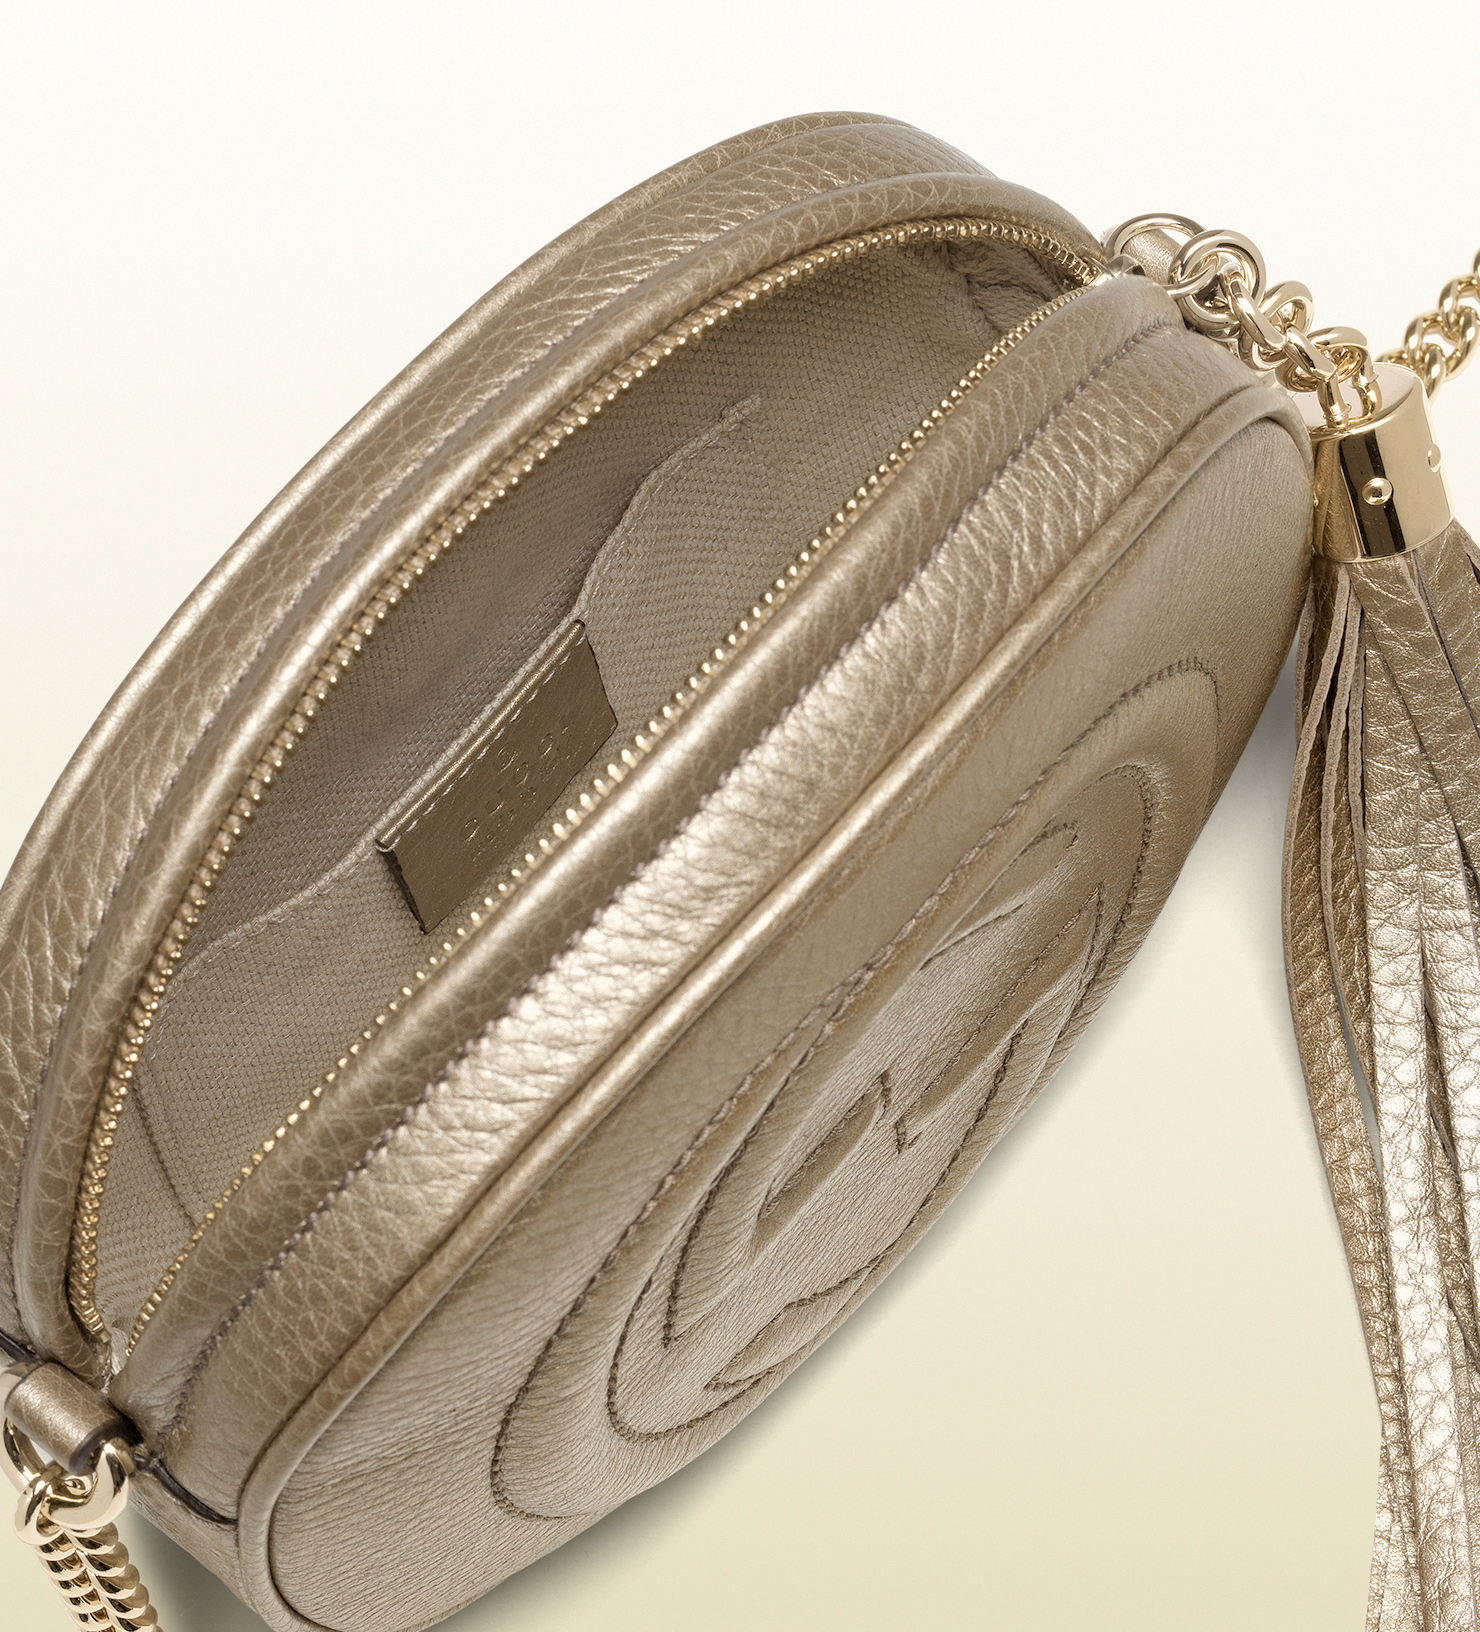 Gucci Soho Metallic Leather Mini Chain Bag in Natural - Lyst